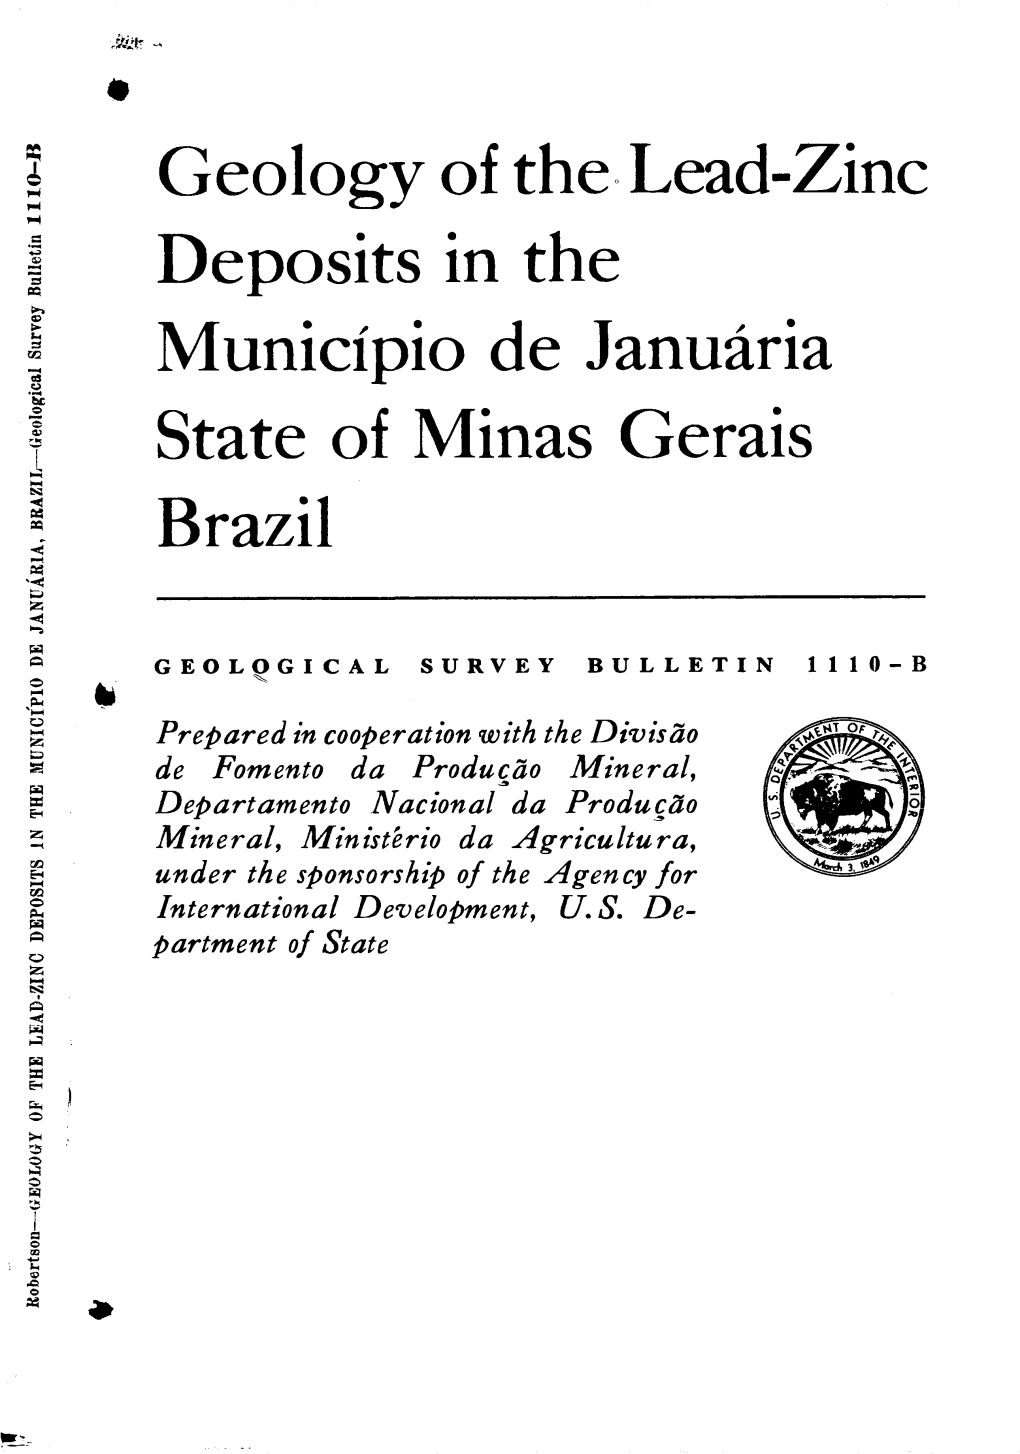 Geology of the Lead-Zinc Deposits in the Municipio De Januaria State of Minas Gerais Brazil